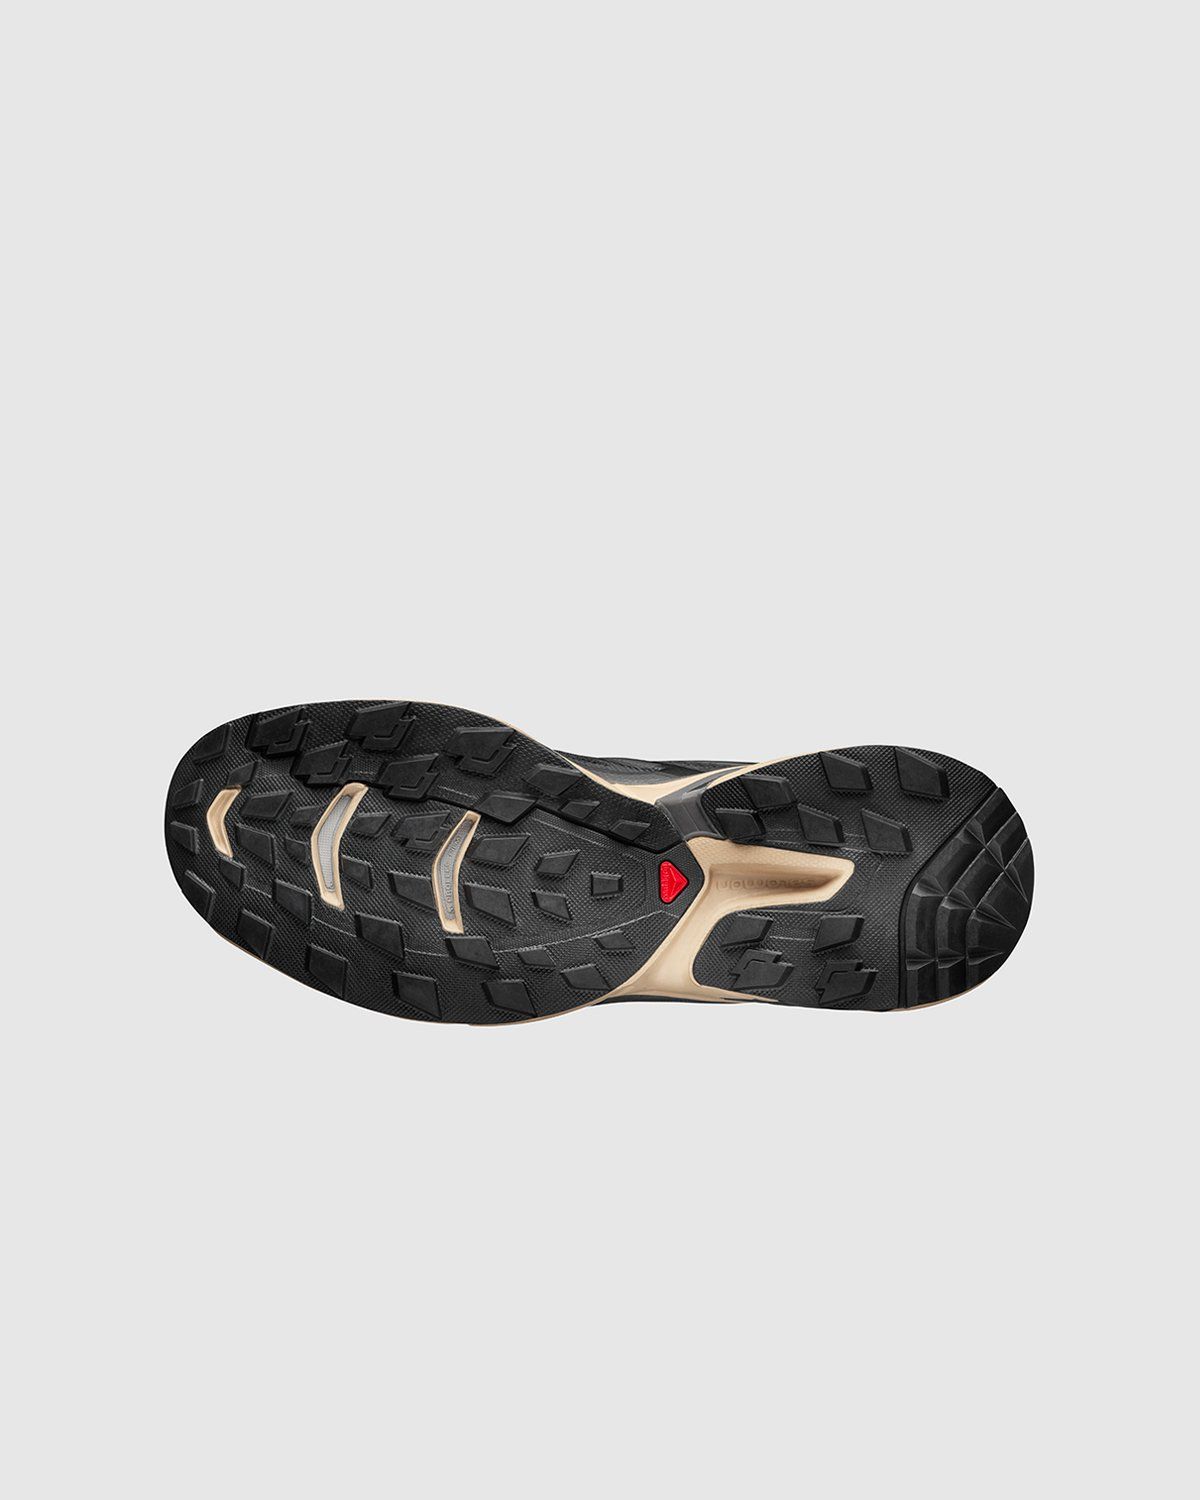 Salomon – XT-WINGS 2 ADVANCED Black/Safari/Magnet - Sneakers - Black - Image 5